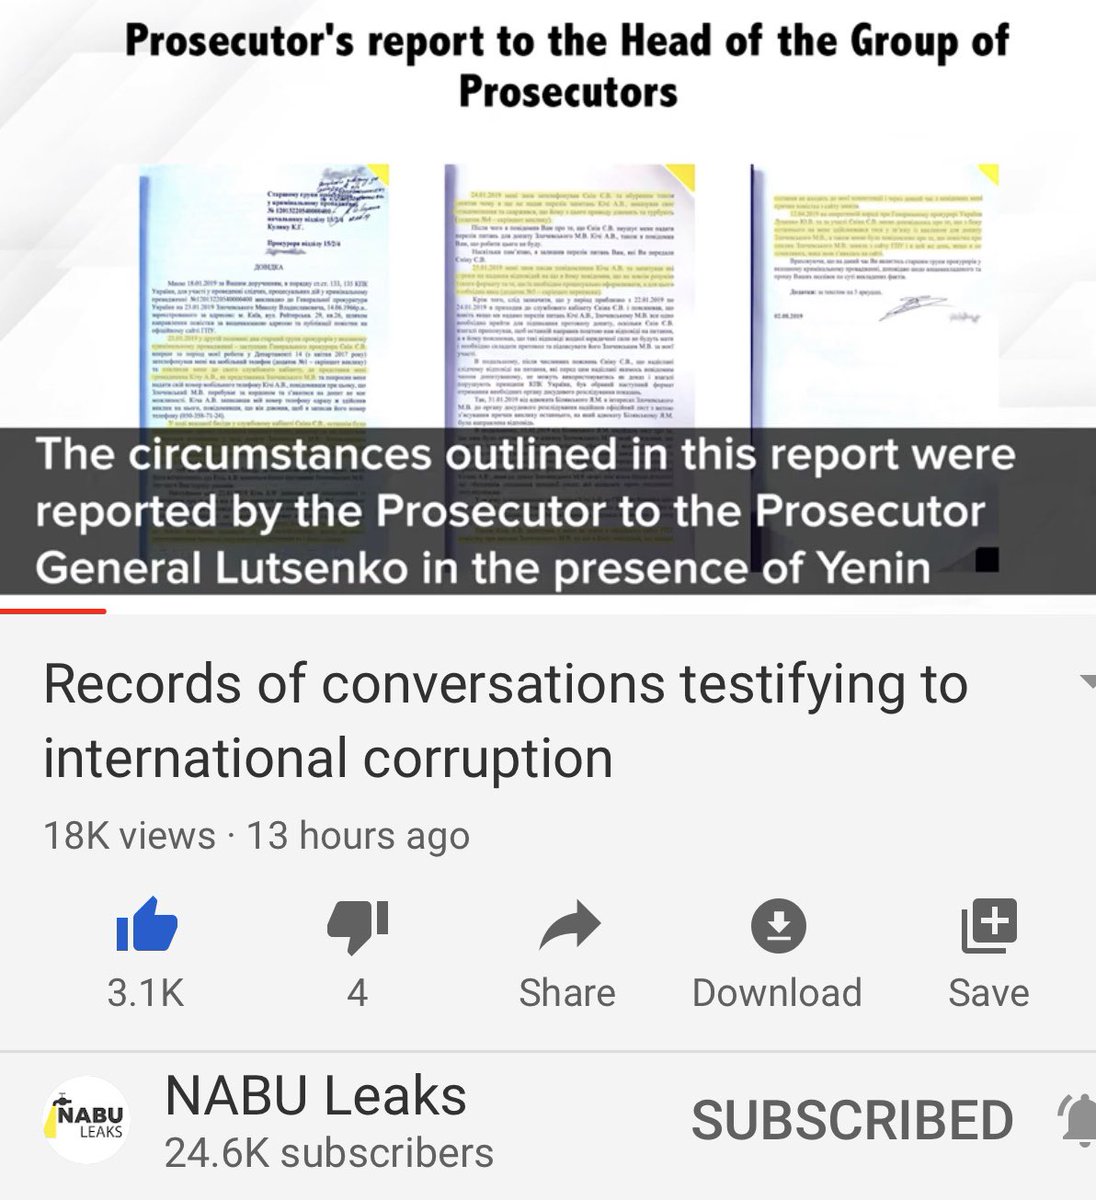 More on the report, Yenin, Kicha, and the report presented to Lutsenko